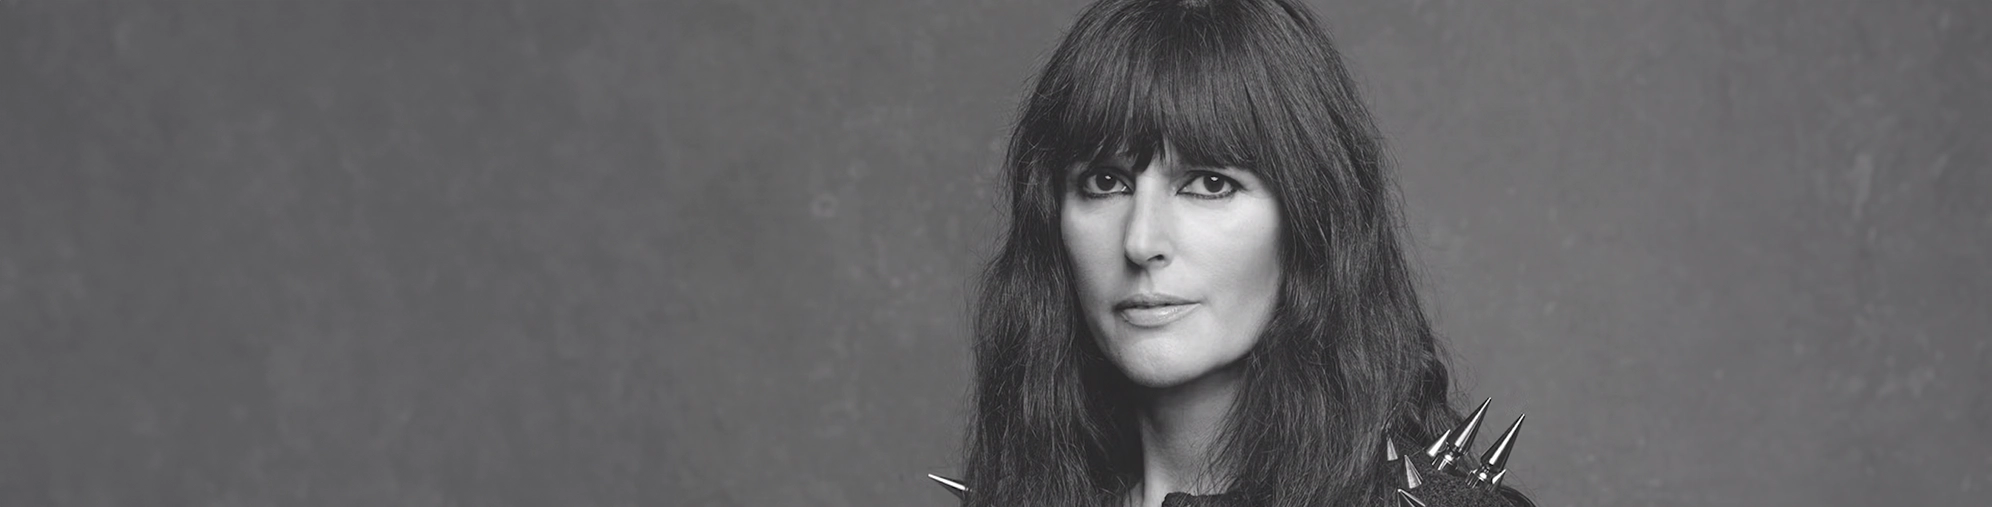 Virginie Viard: Bringing the Legacy of Chanel into a New Era